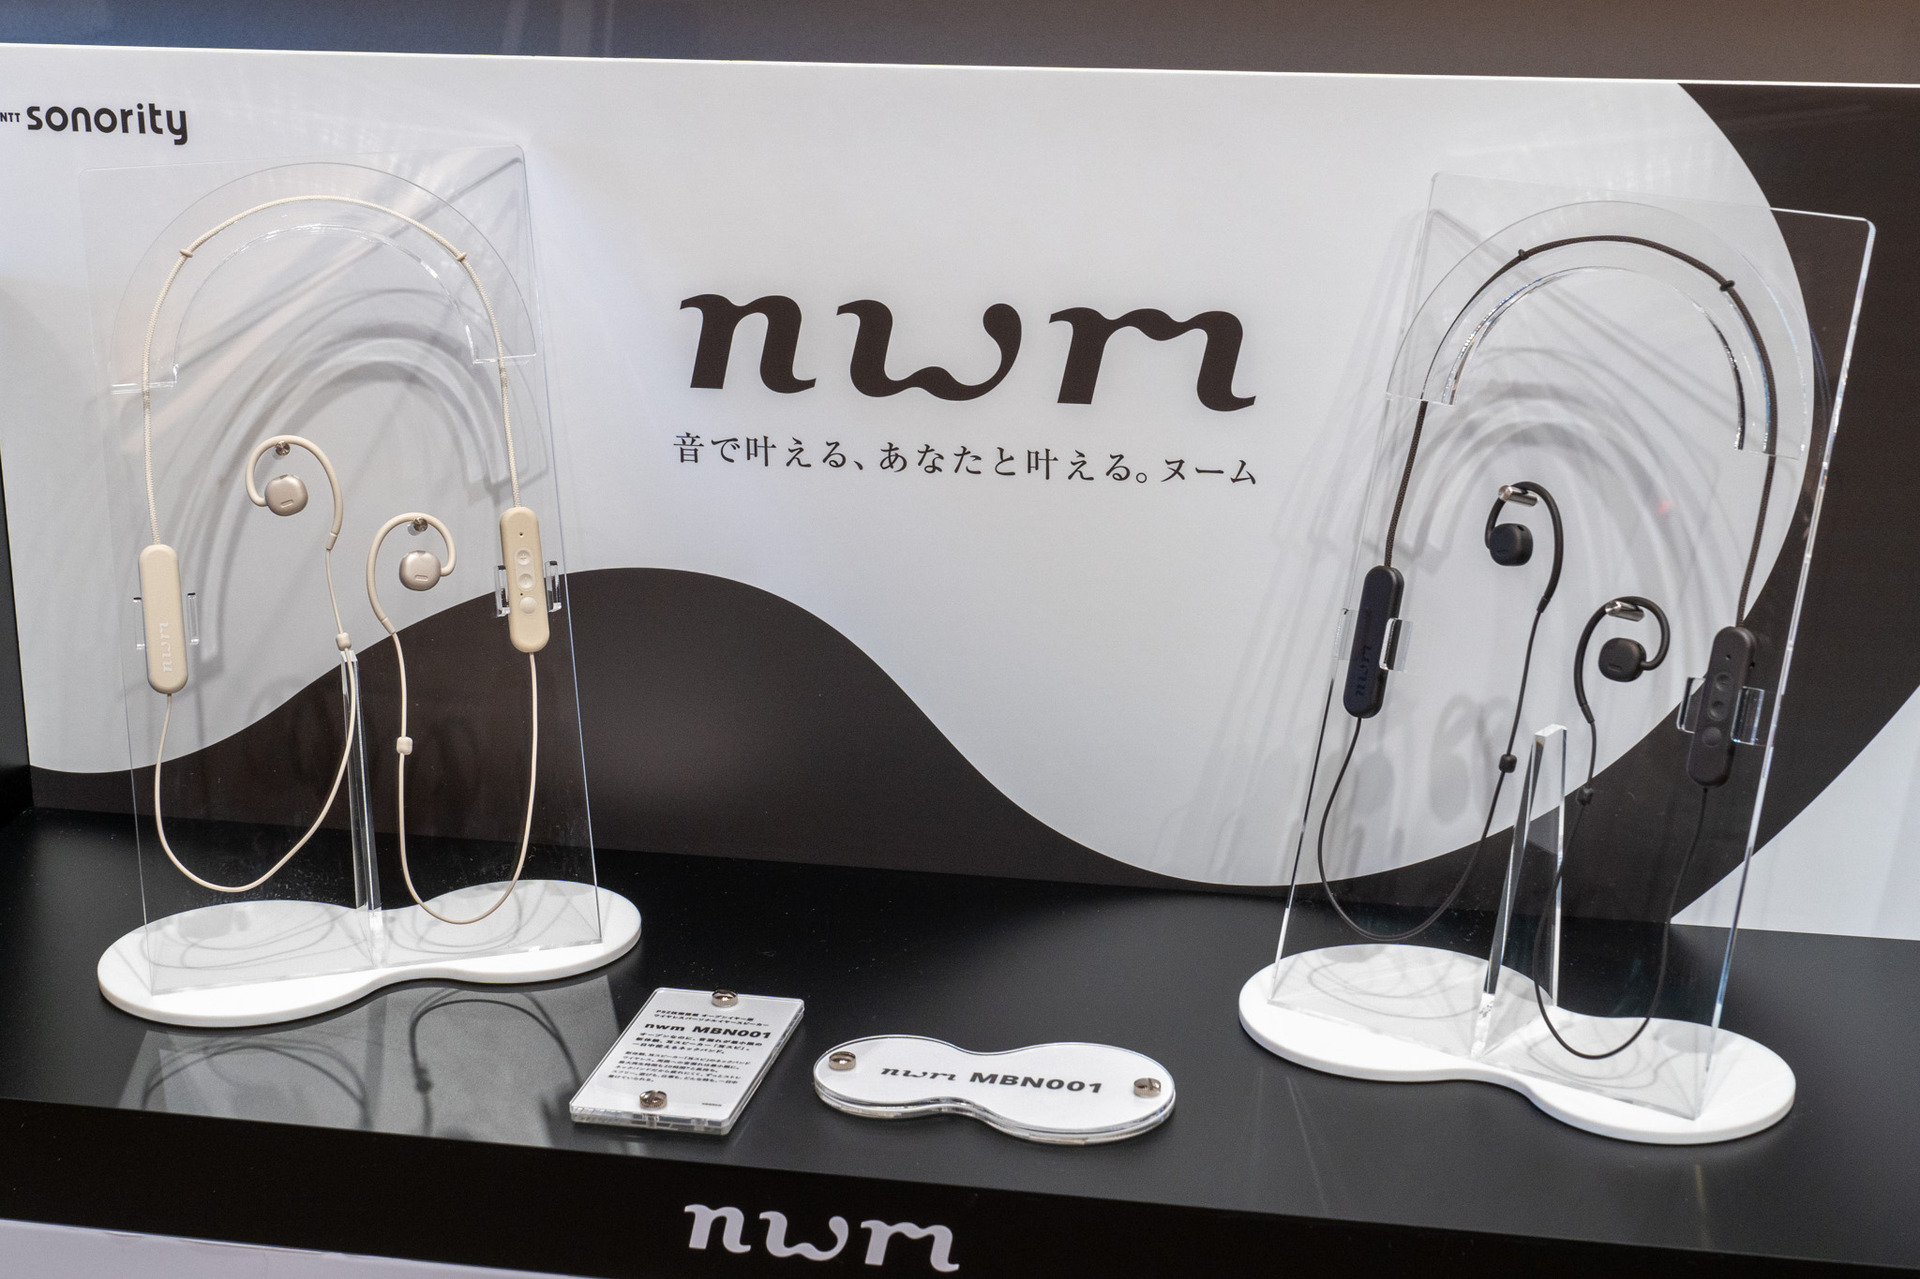 NTTの耳を塞がないイヤホン耳スピにネックバンド型 nwm MBN発売